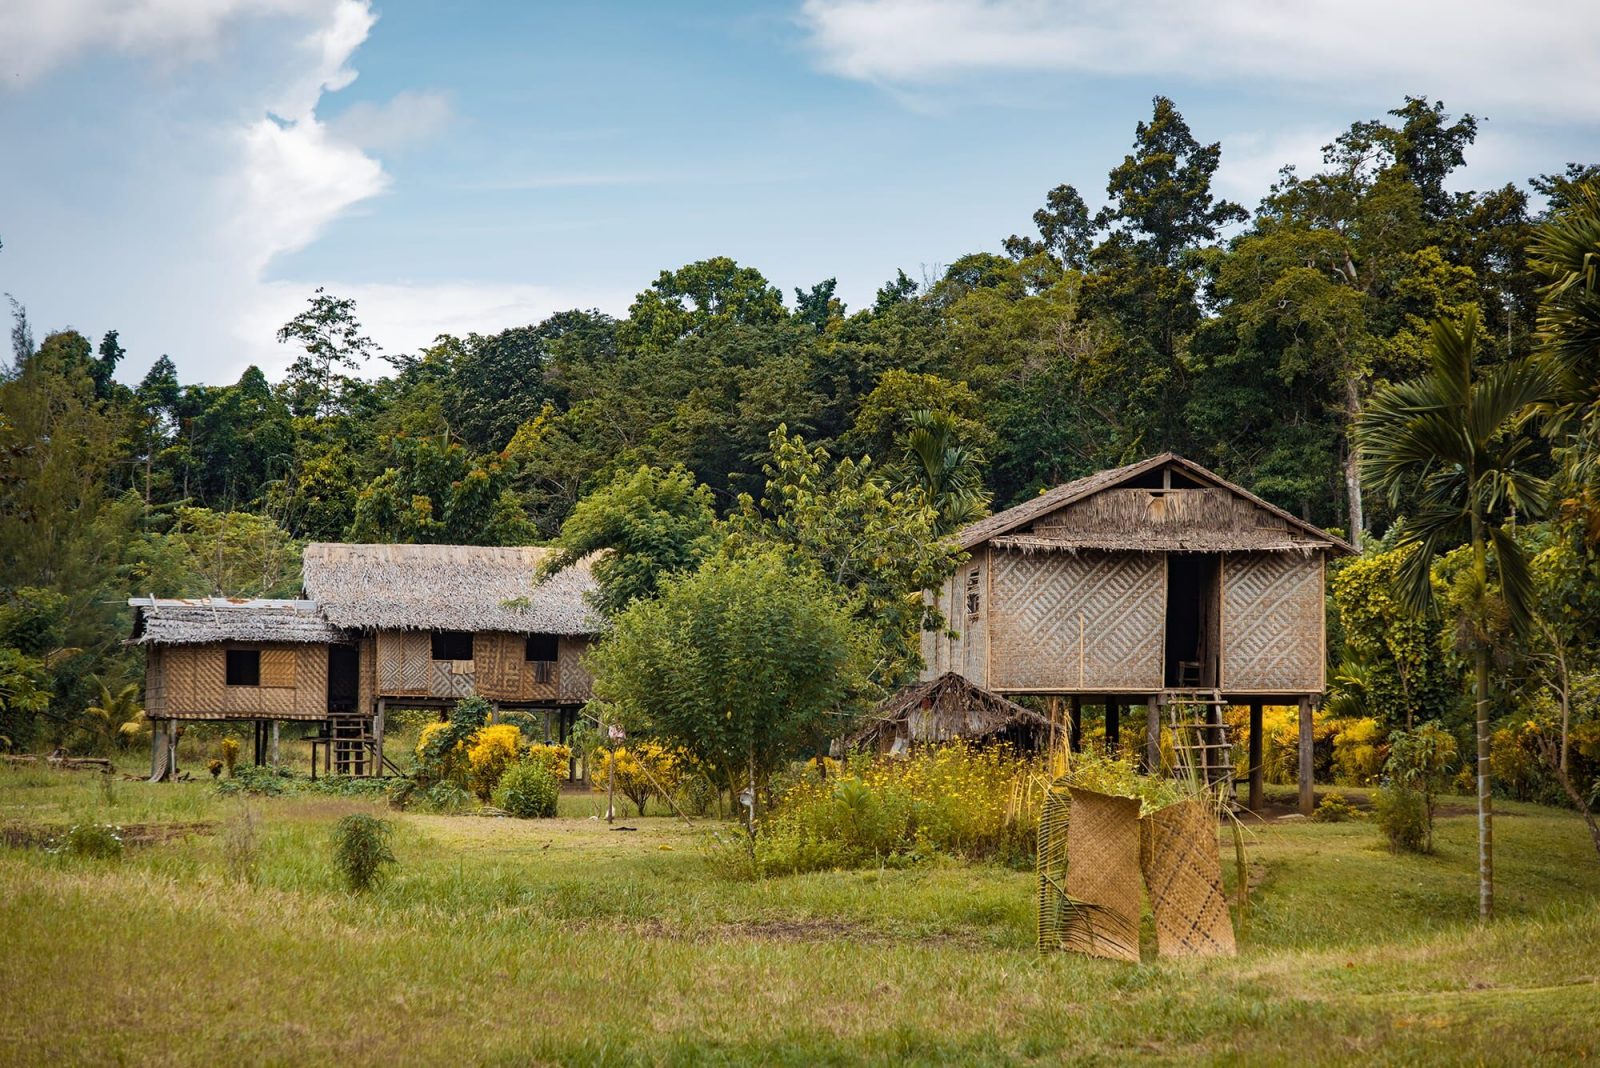 The beautiful huts of Sololo Village, Papua New Guinea.